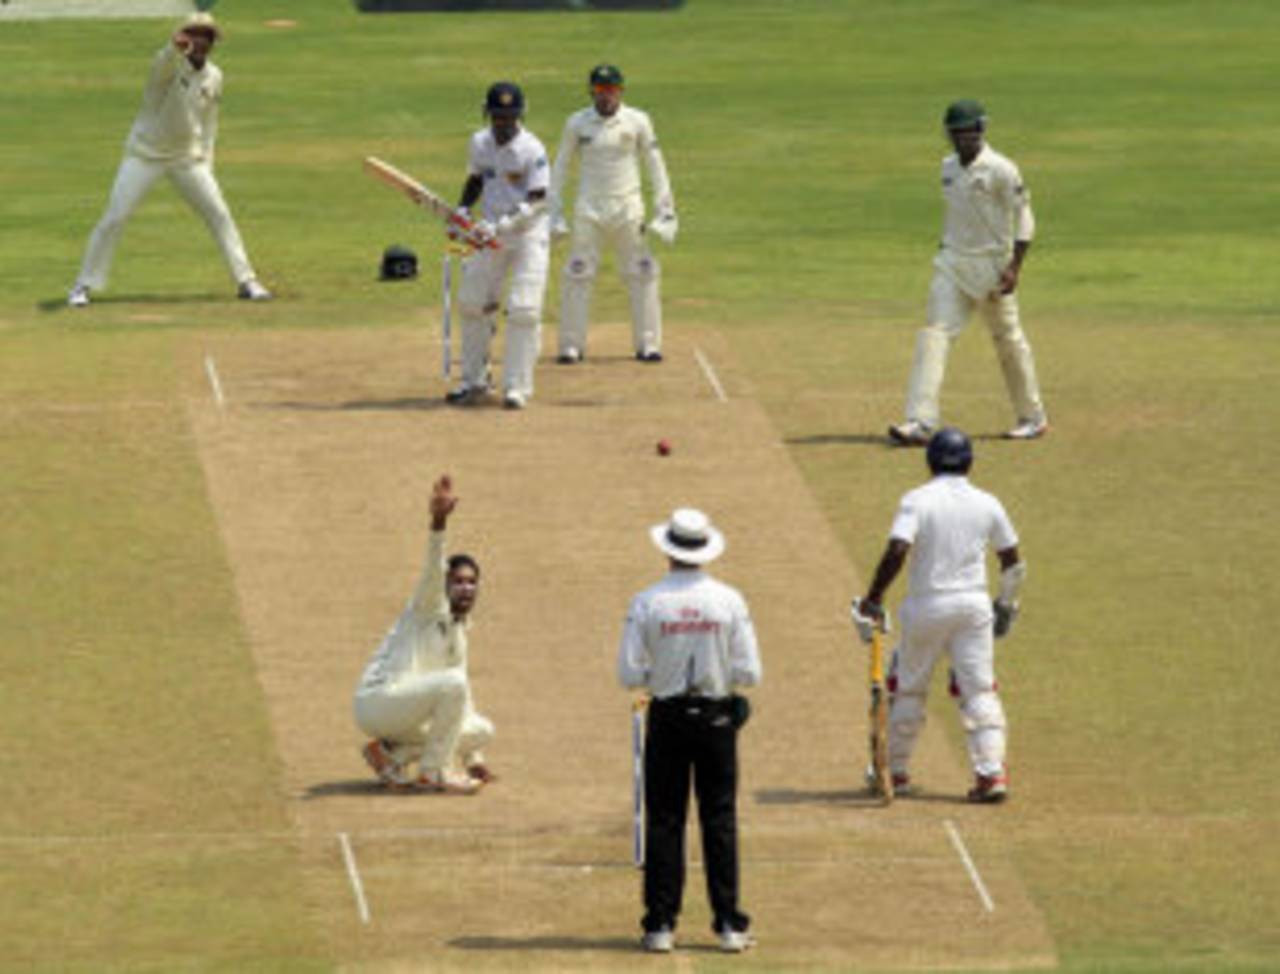 Sohag Gazi belts out an appeal, Sri Lanka v Bangladesh, 2nd Test, Colombo, 3rd day, March 18, 2013